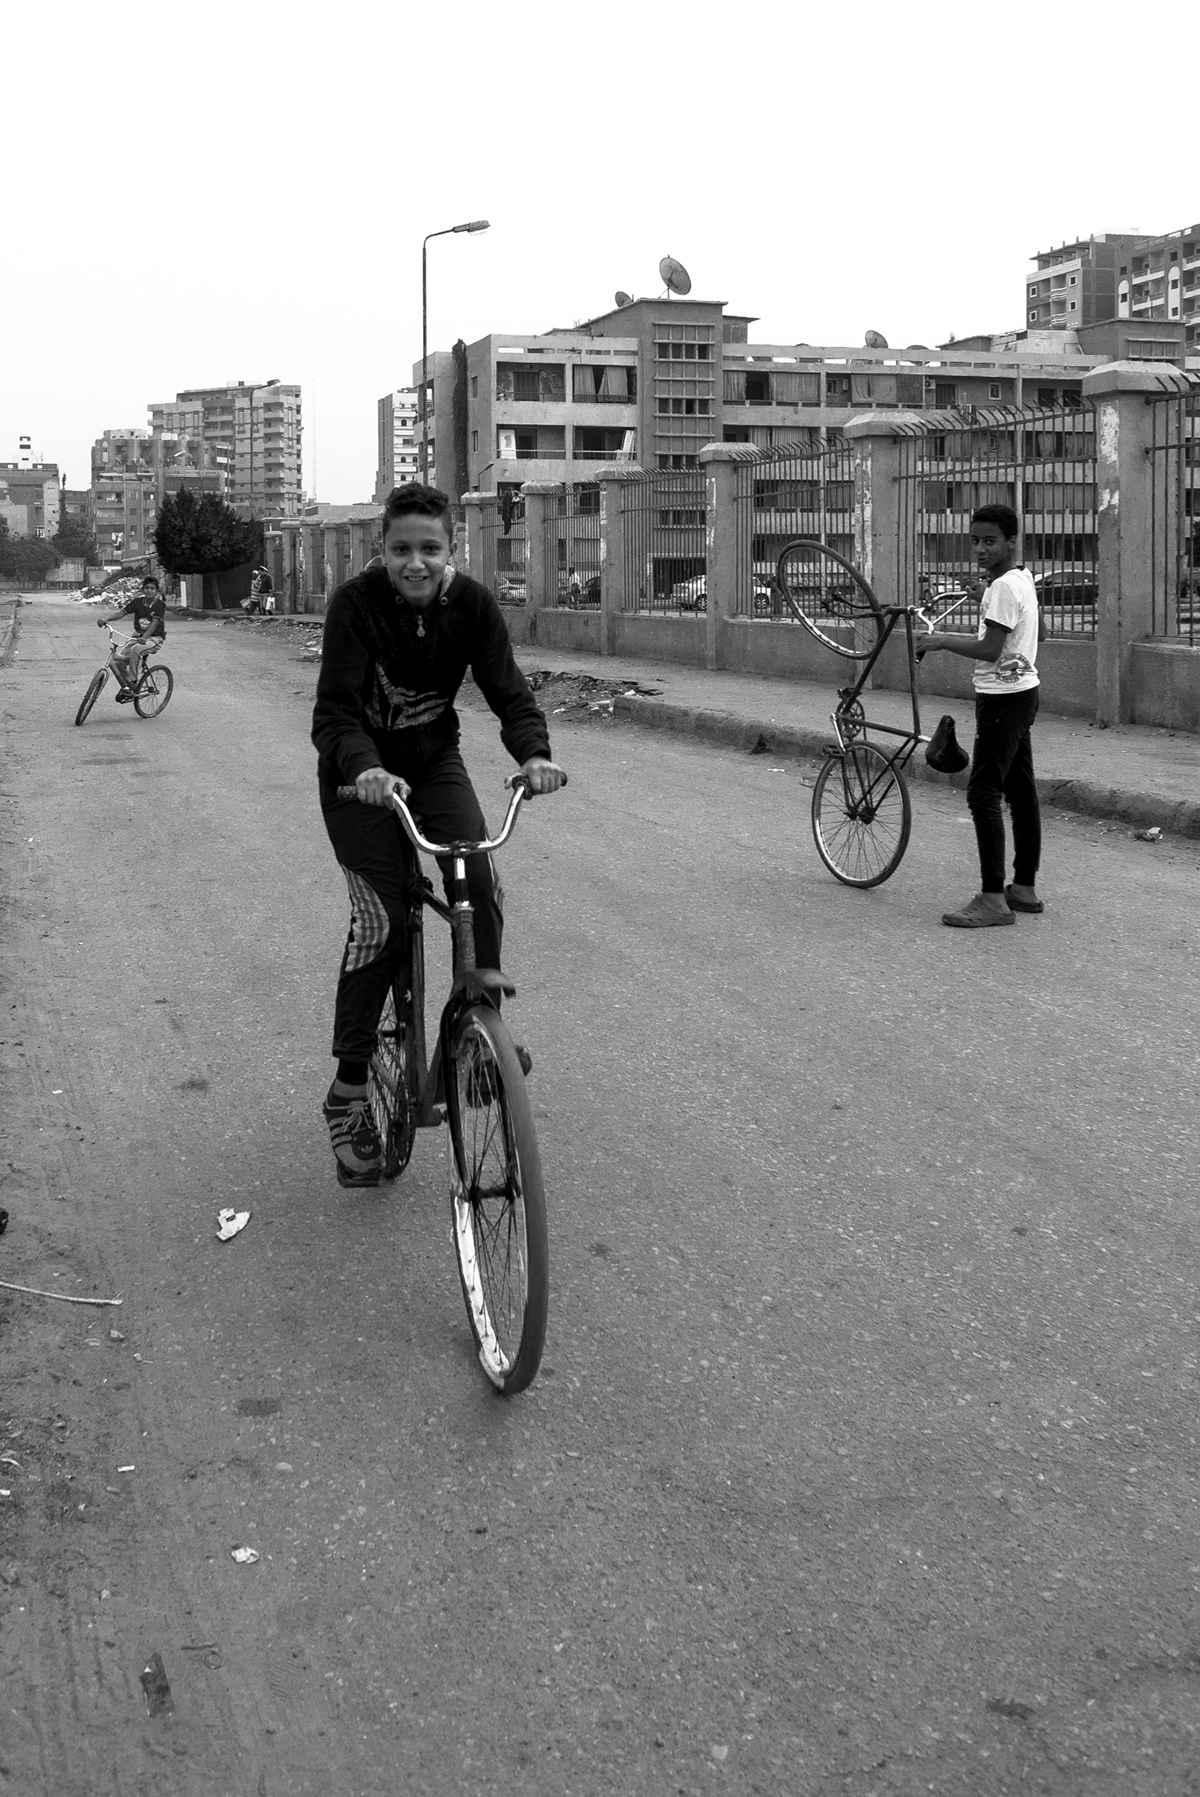 egypt ismailia city street photography